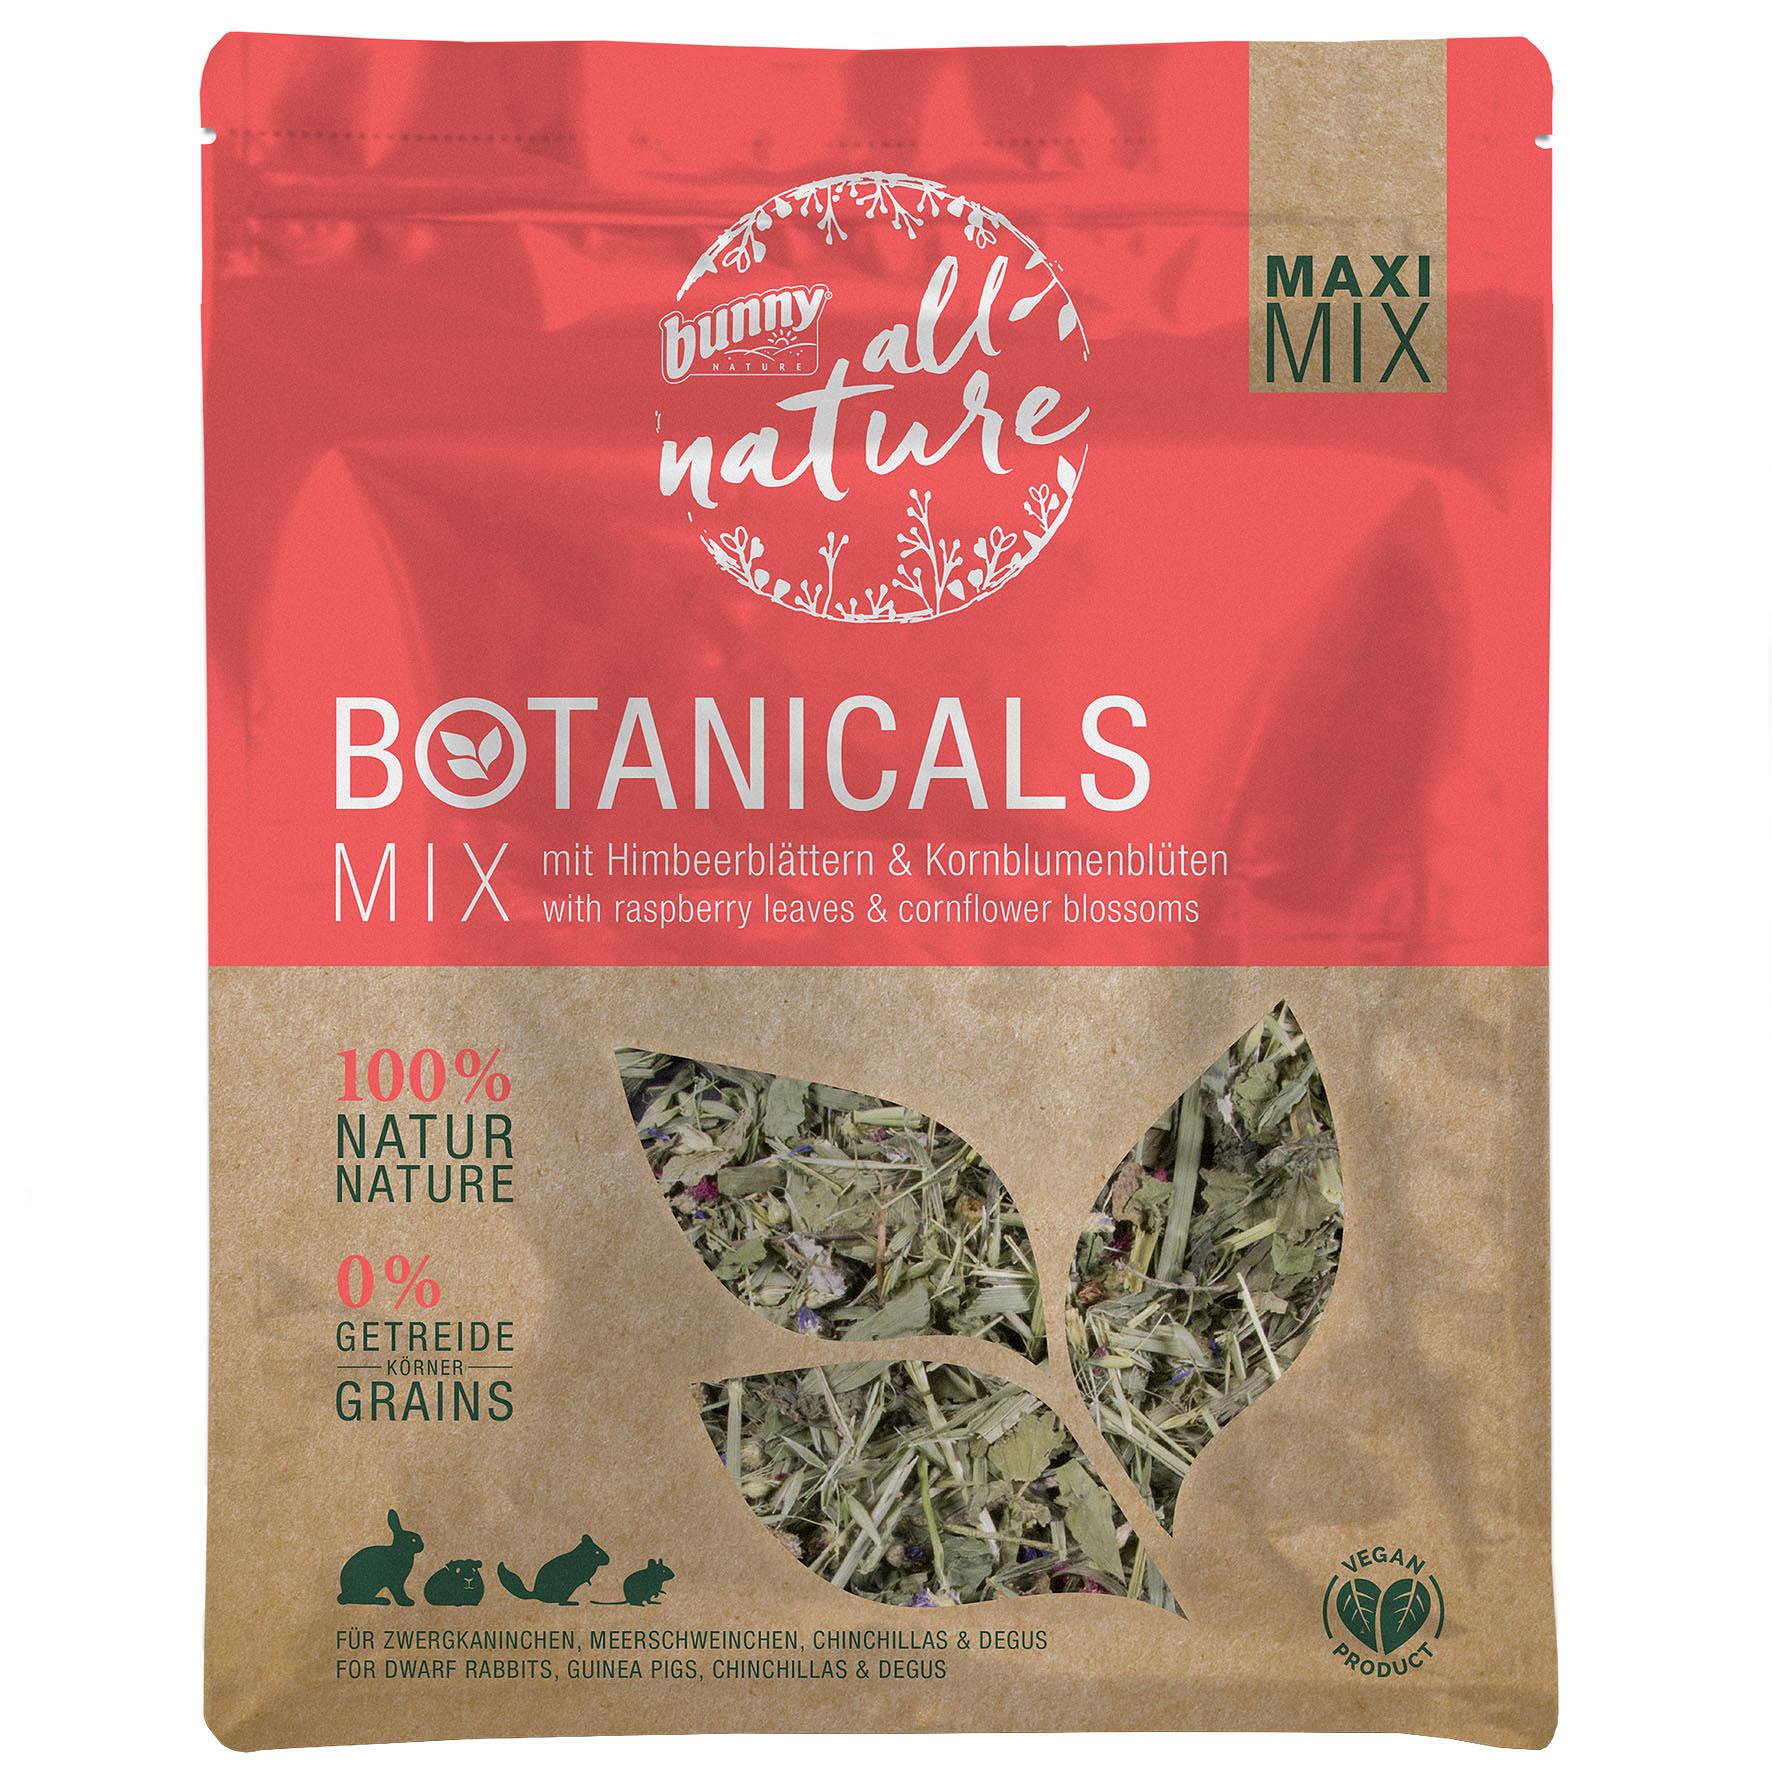 Bunny Botanicals - MaxiMix